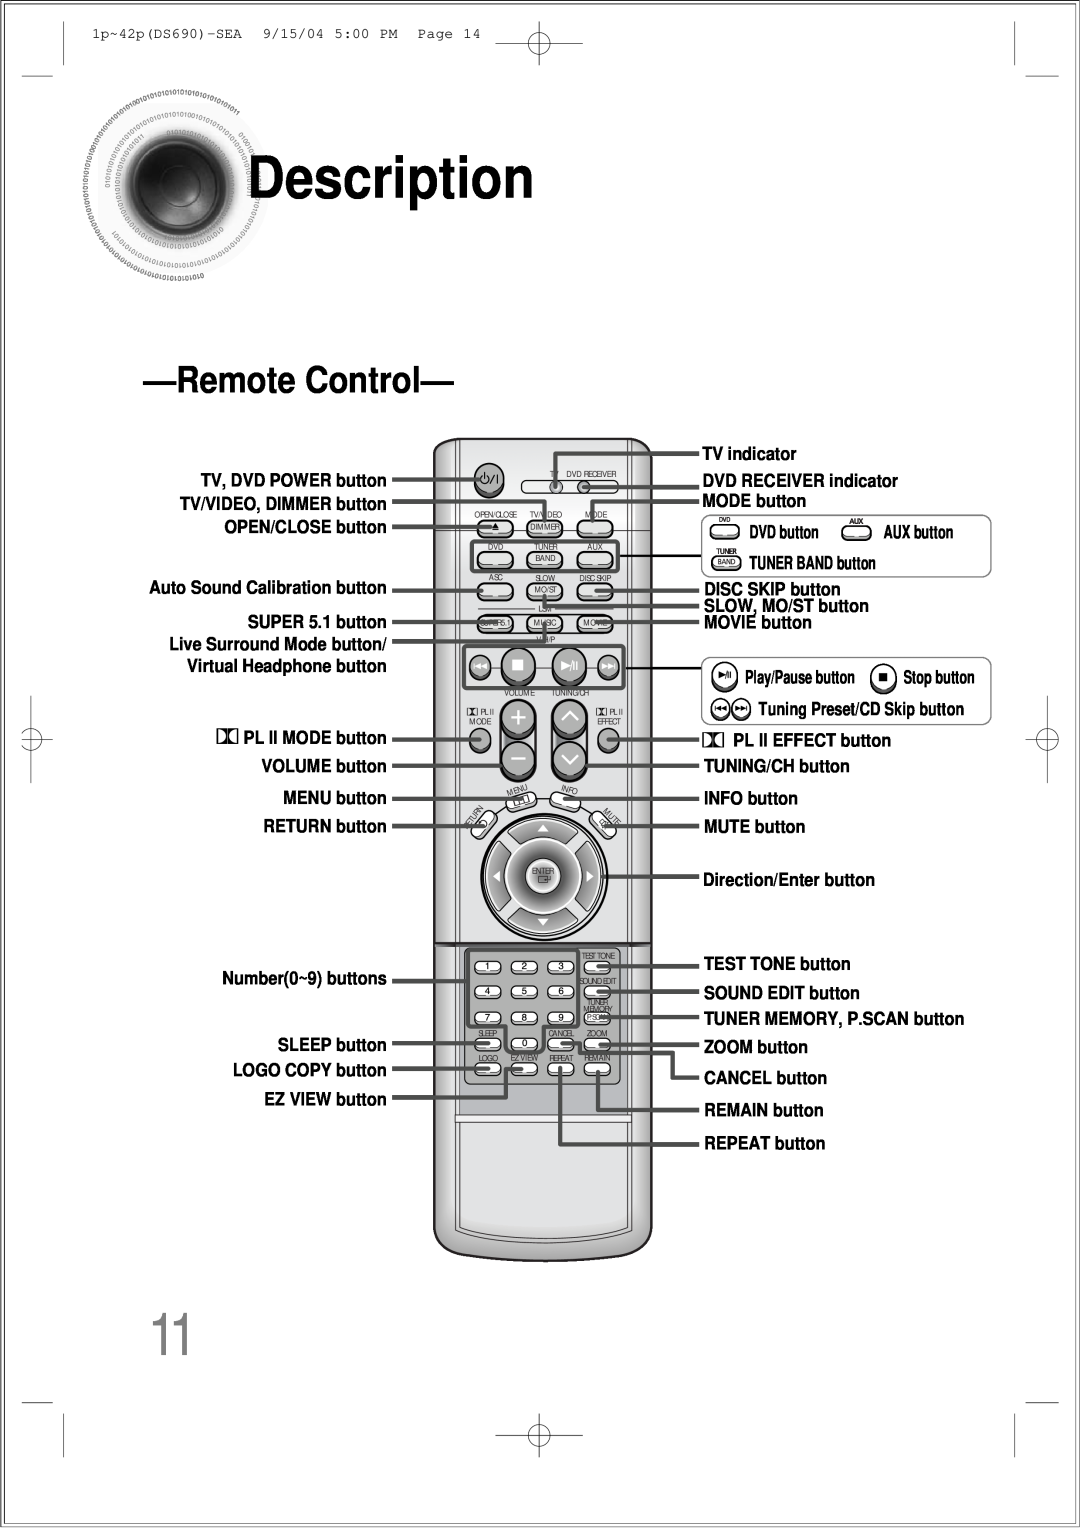 Samsung HT-DS690 instruction manual Description, RemoteControl, TV indicator, Auto Sound Calibration button, RETURN button 